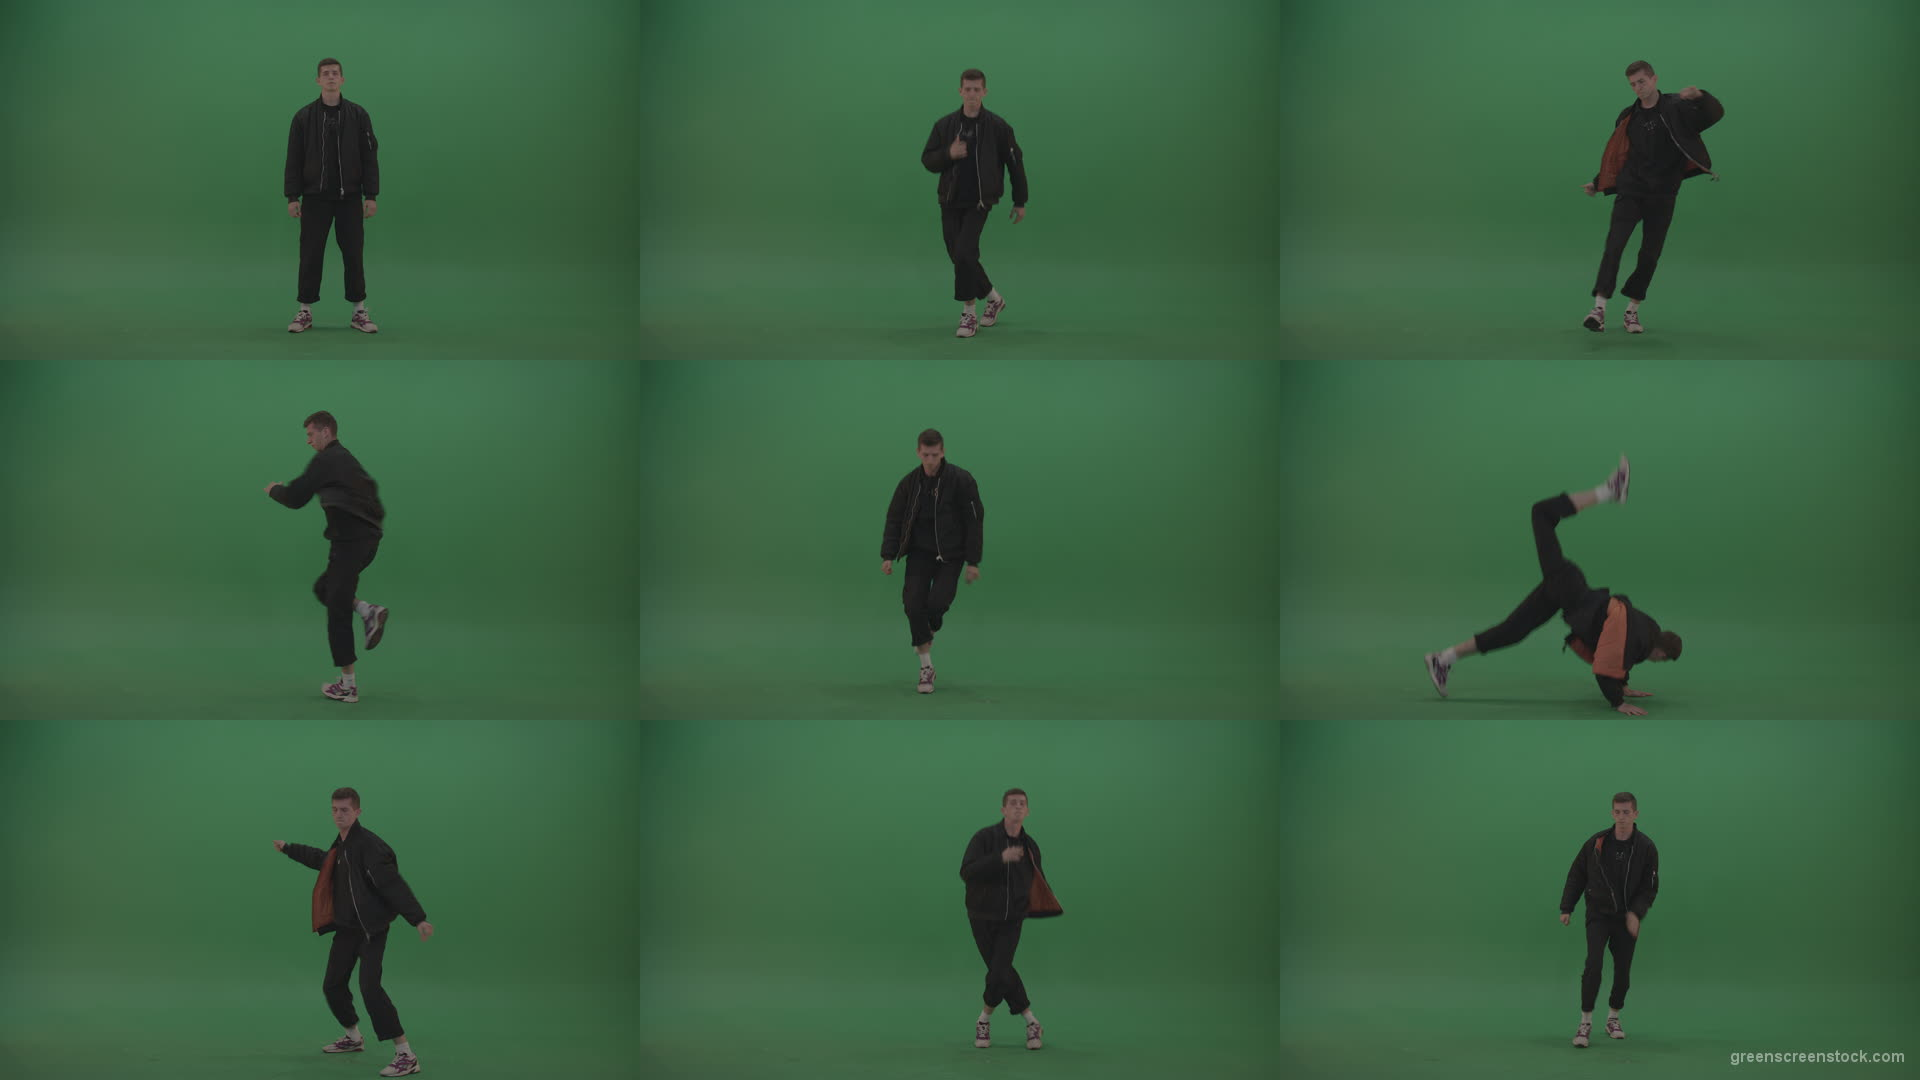 B-Boy-Man-Dancing-top-break-dance-on-green-screen-background Green Screen Stock